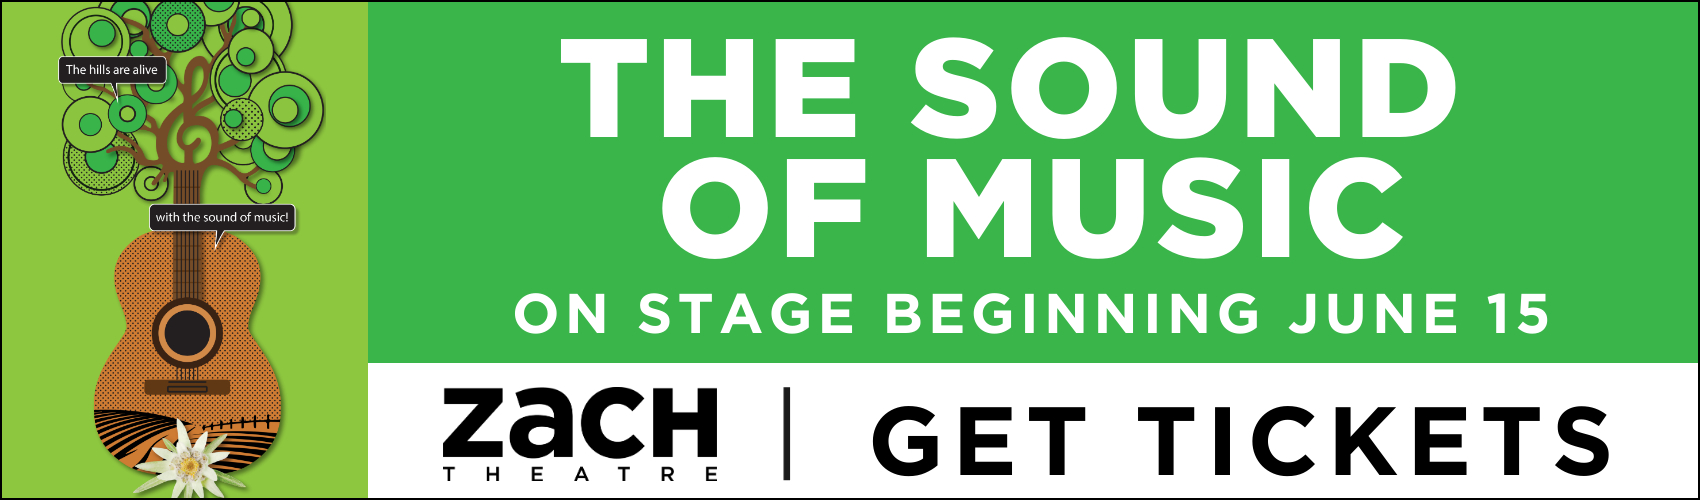 ZACH Theatre Presents The Sound of Music